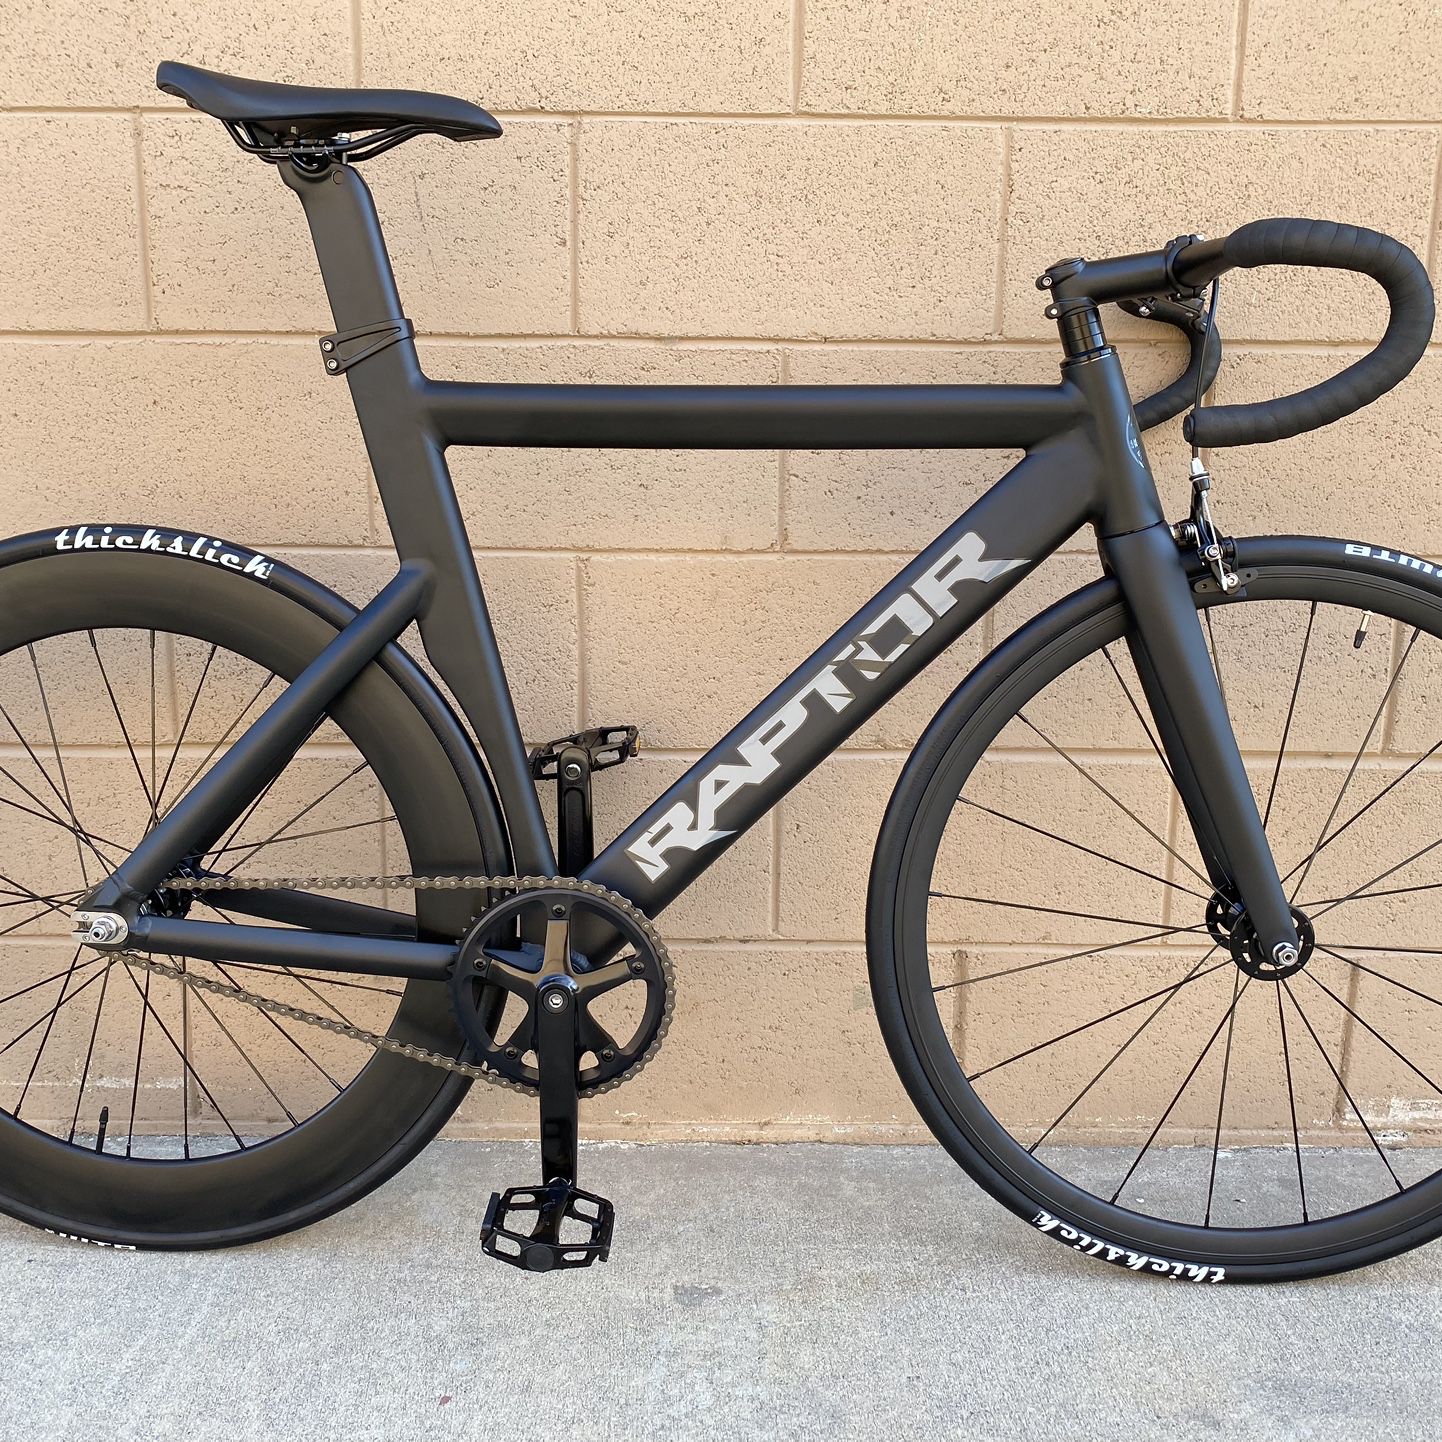 Raptor Single Speed Track Bike $549 Complete New With Dropbars 